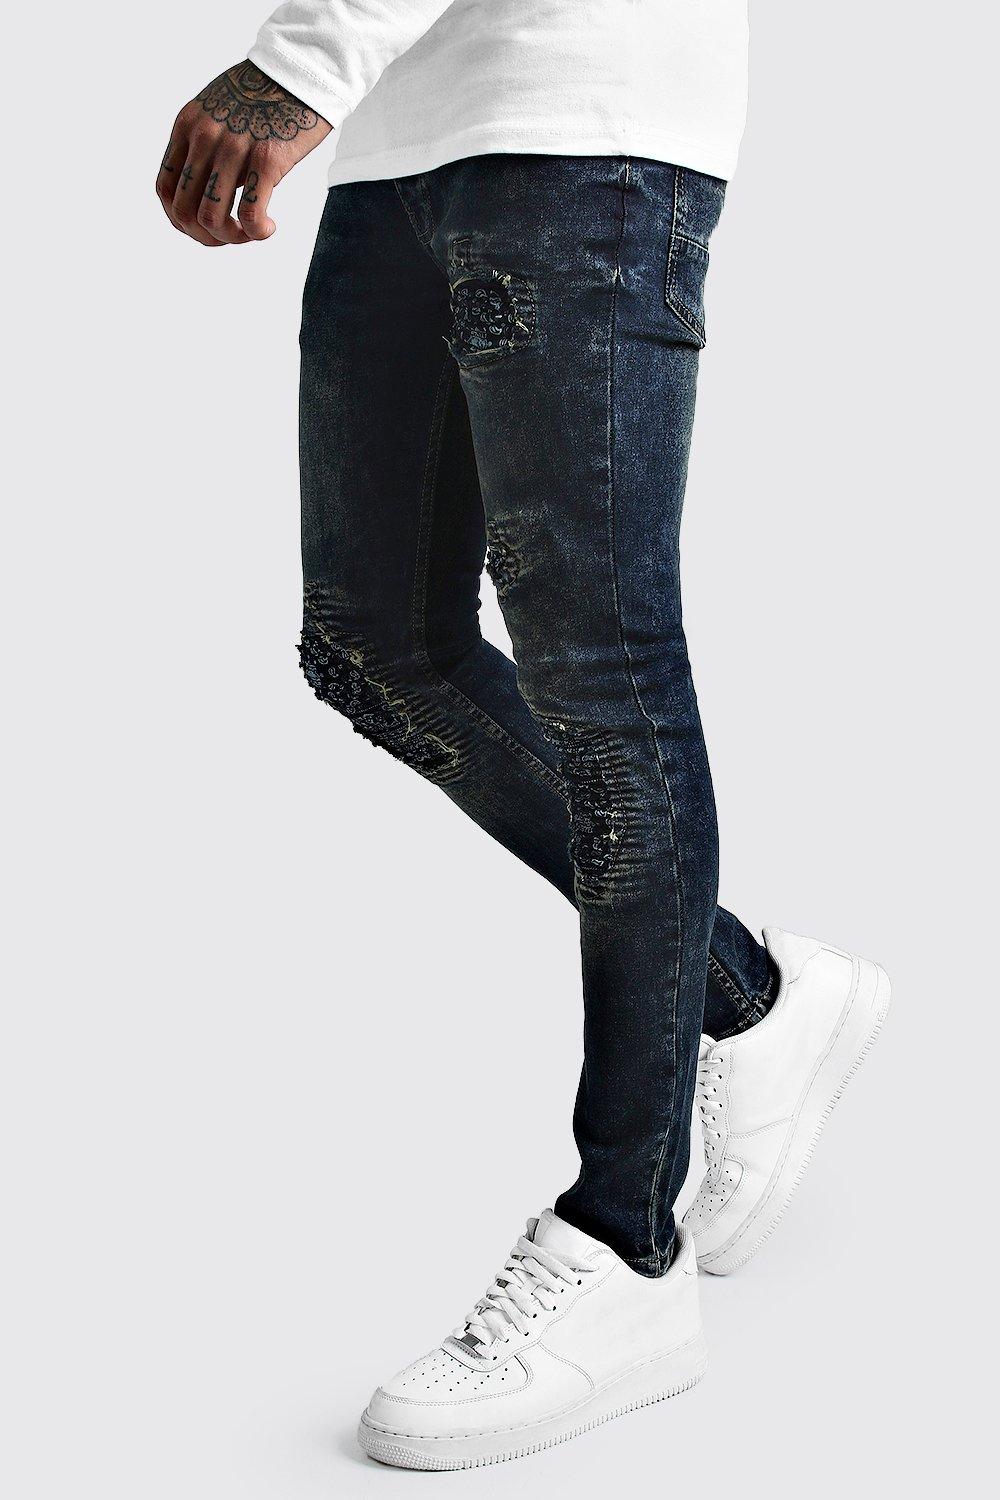 bandana print jeans